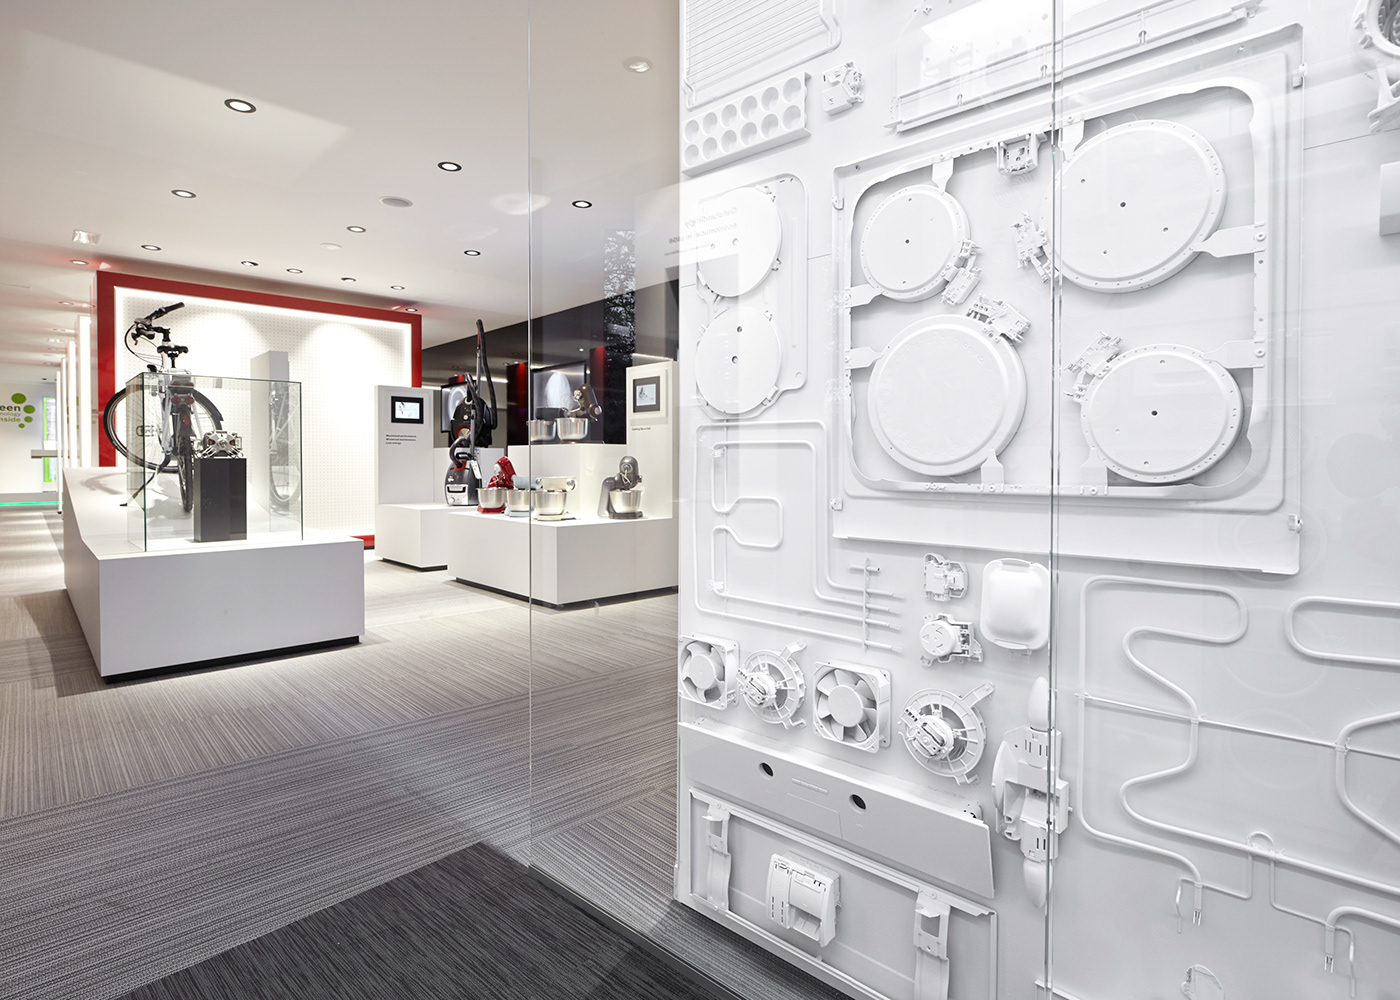 brand center showroom green Technology appliances Story telling belgium creneau international belgian